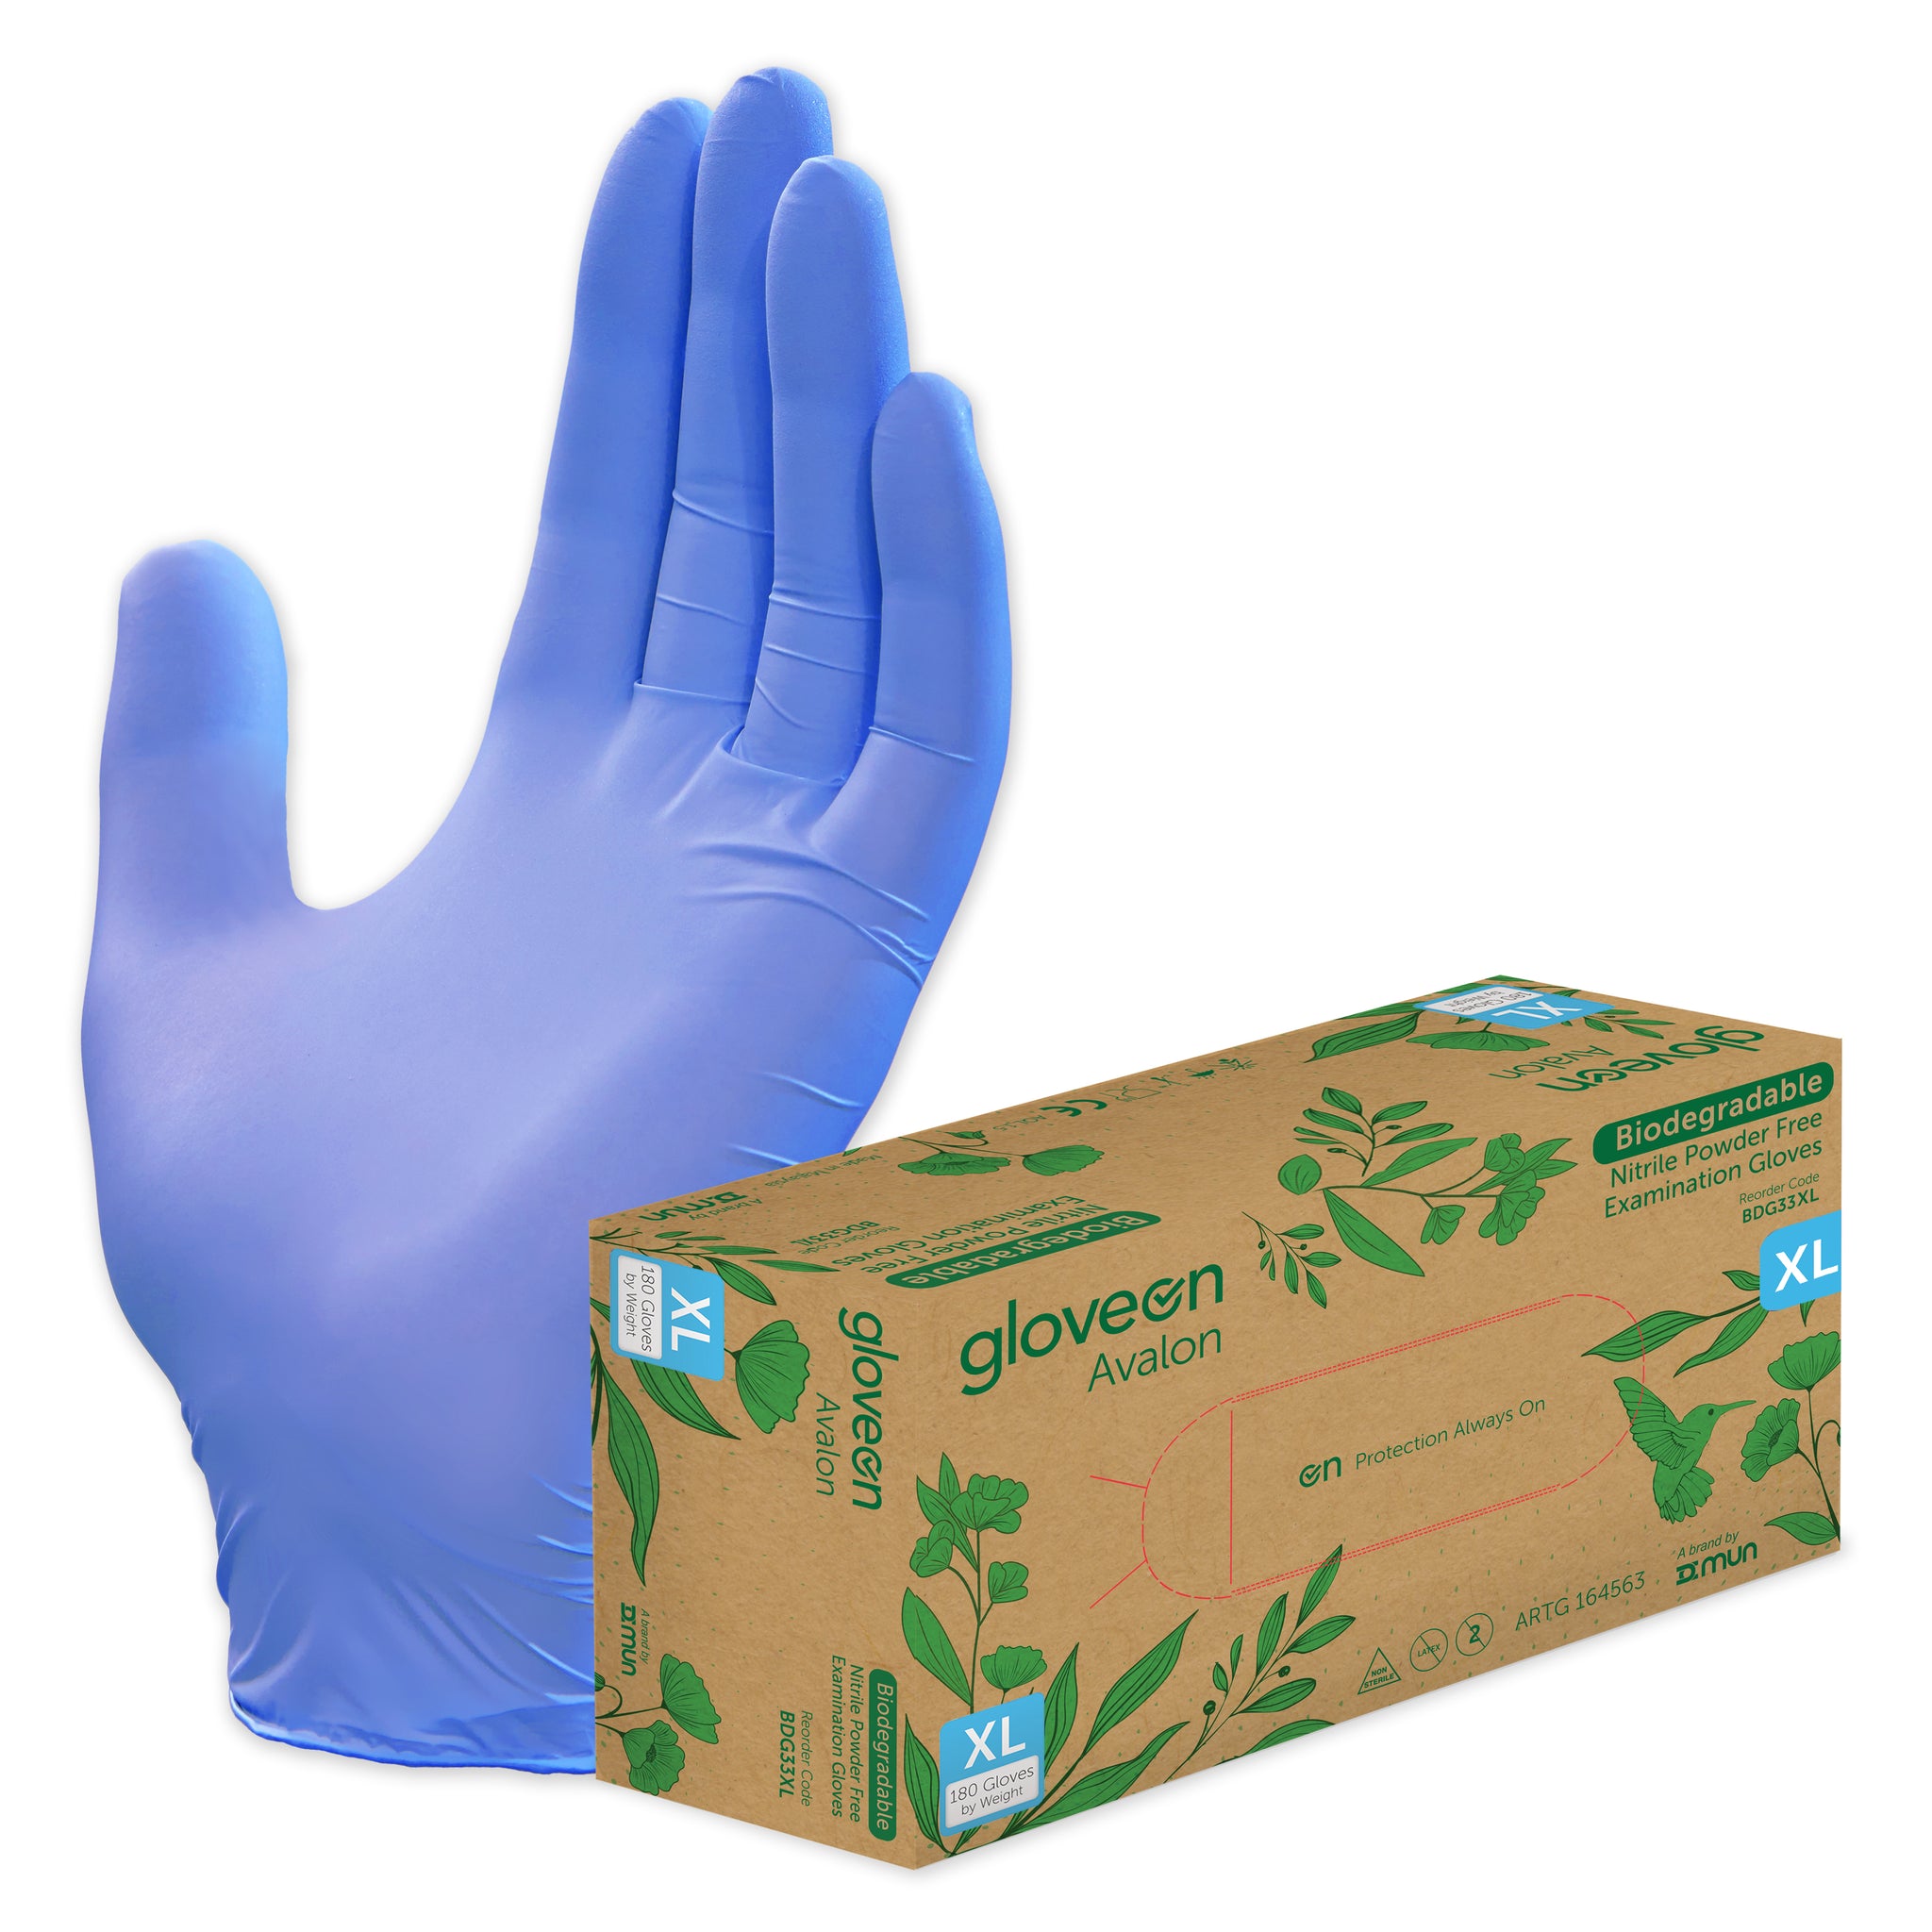 Biodegradable Nitrile Exam Gloves, Powder Free, Non-Sterile, Fingertip Textured, Standard Cuff, Violet Blue - Box of 180, XL